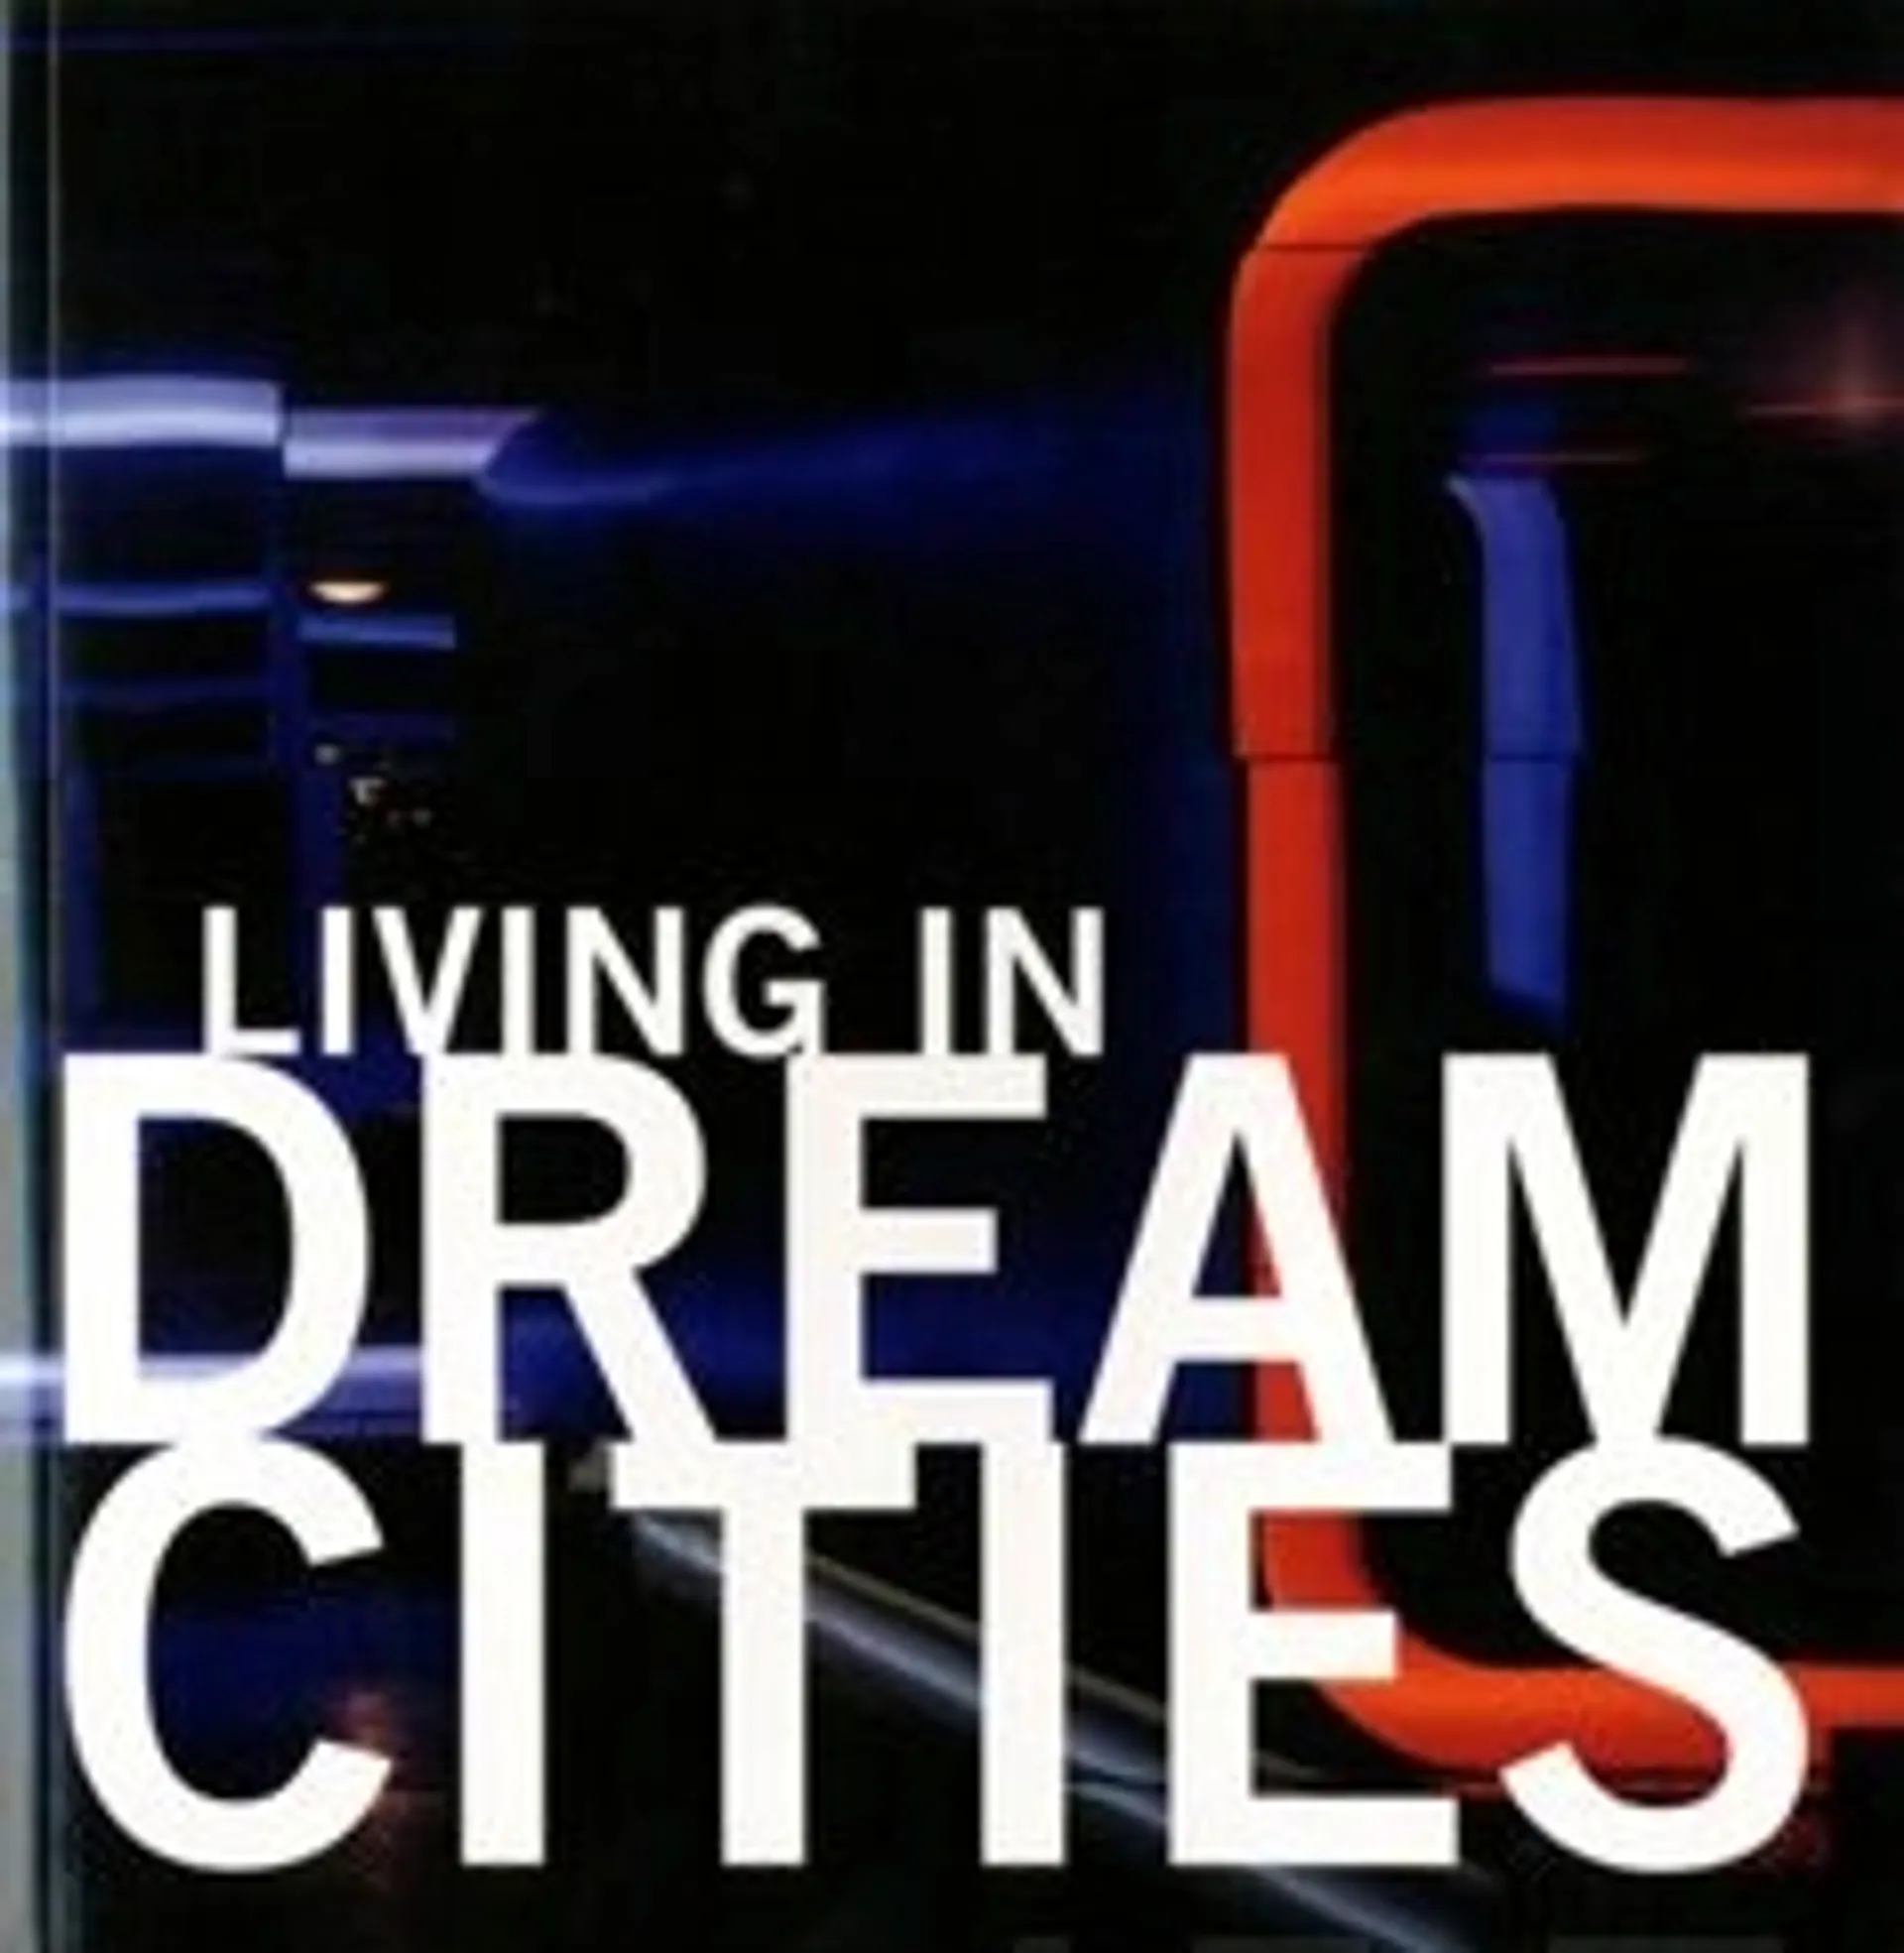 Living in dream cities